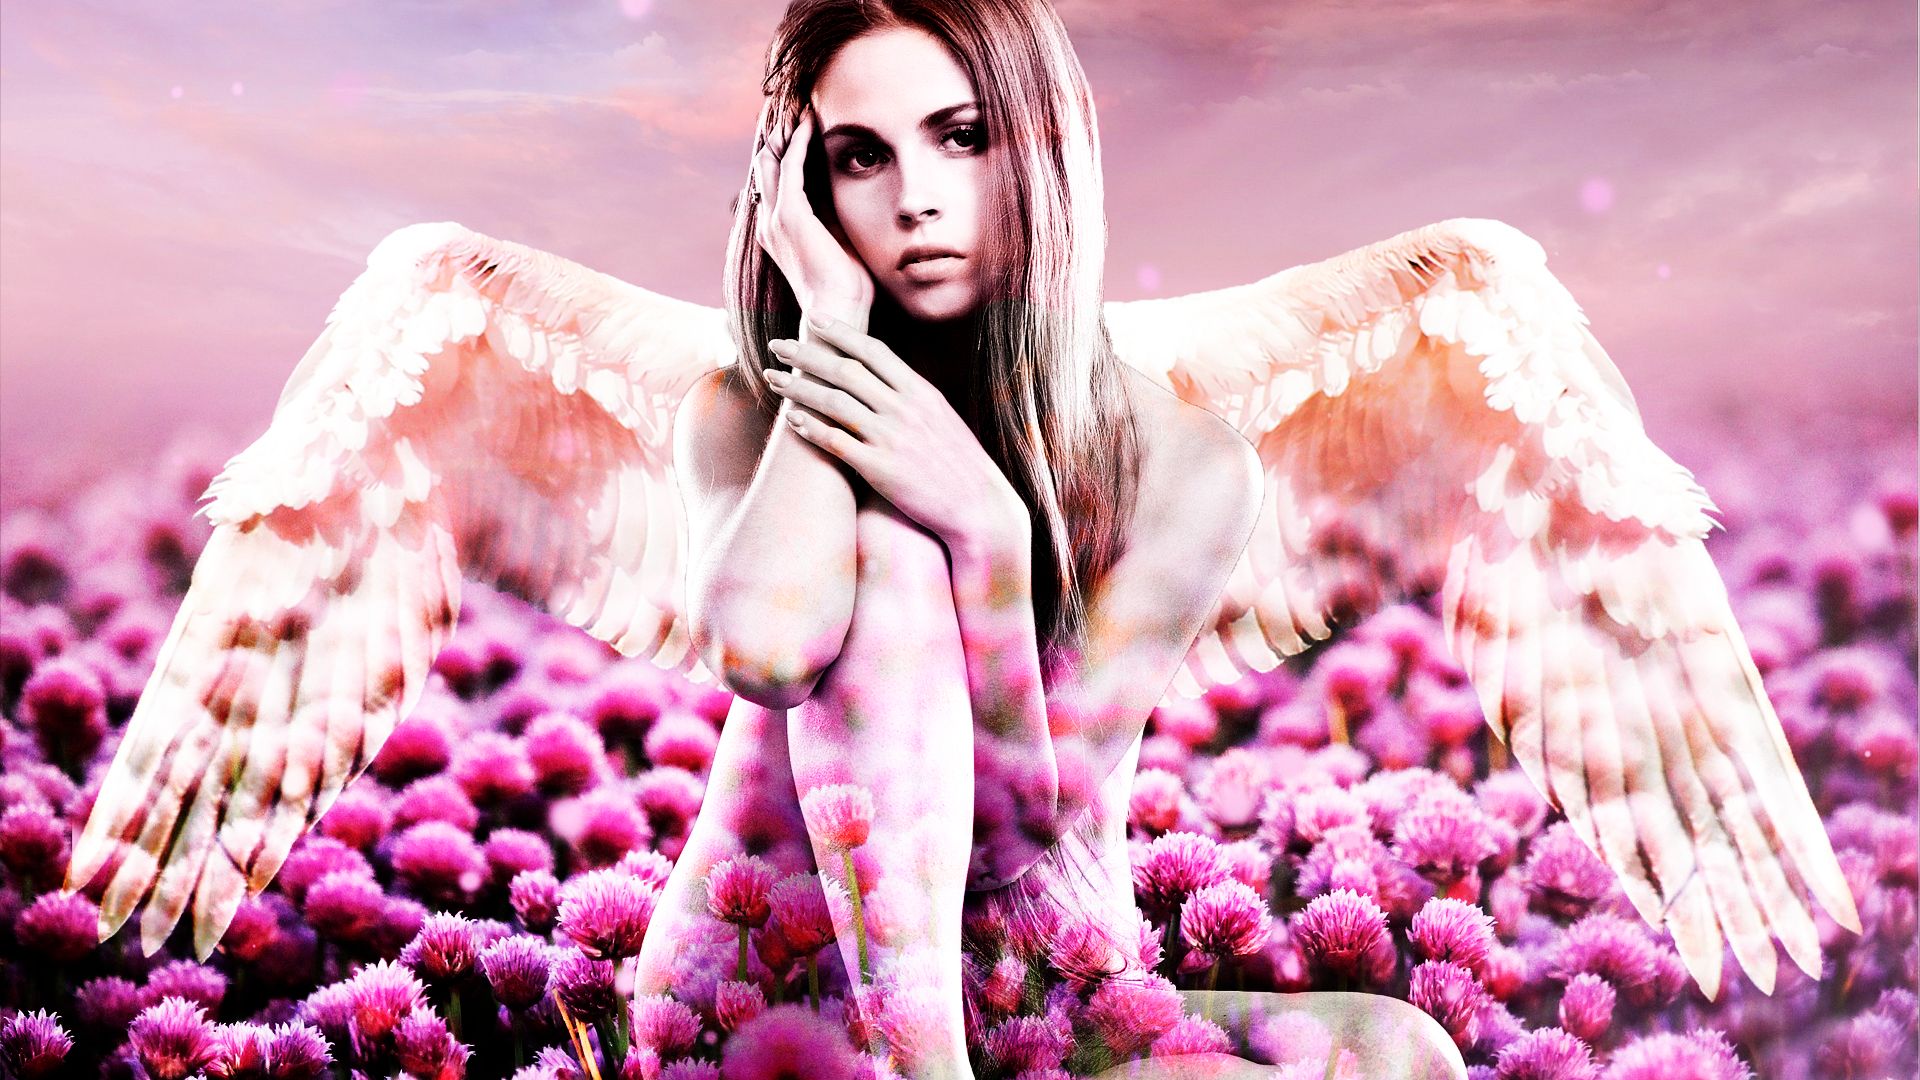 Angel de las mariposas 3.jpg